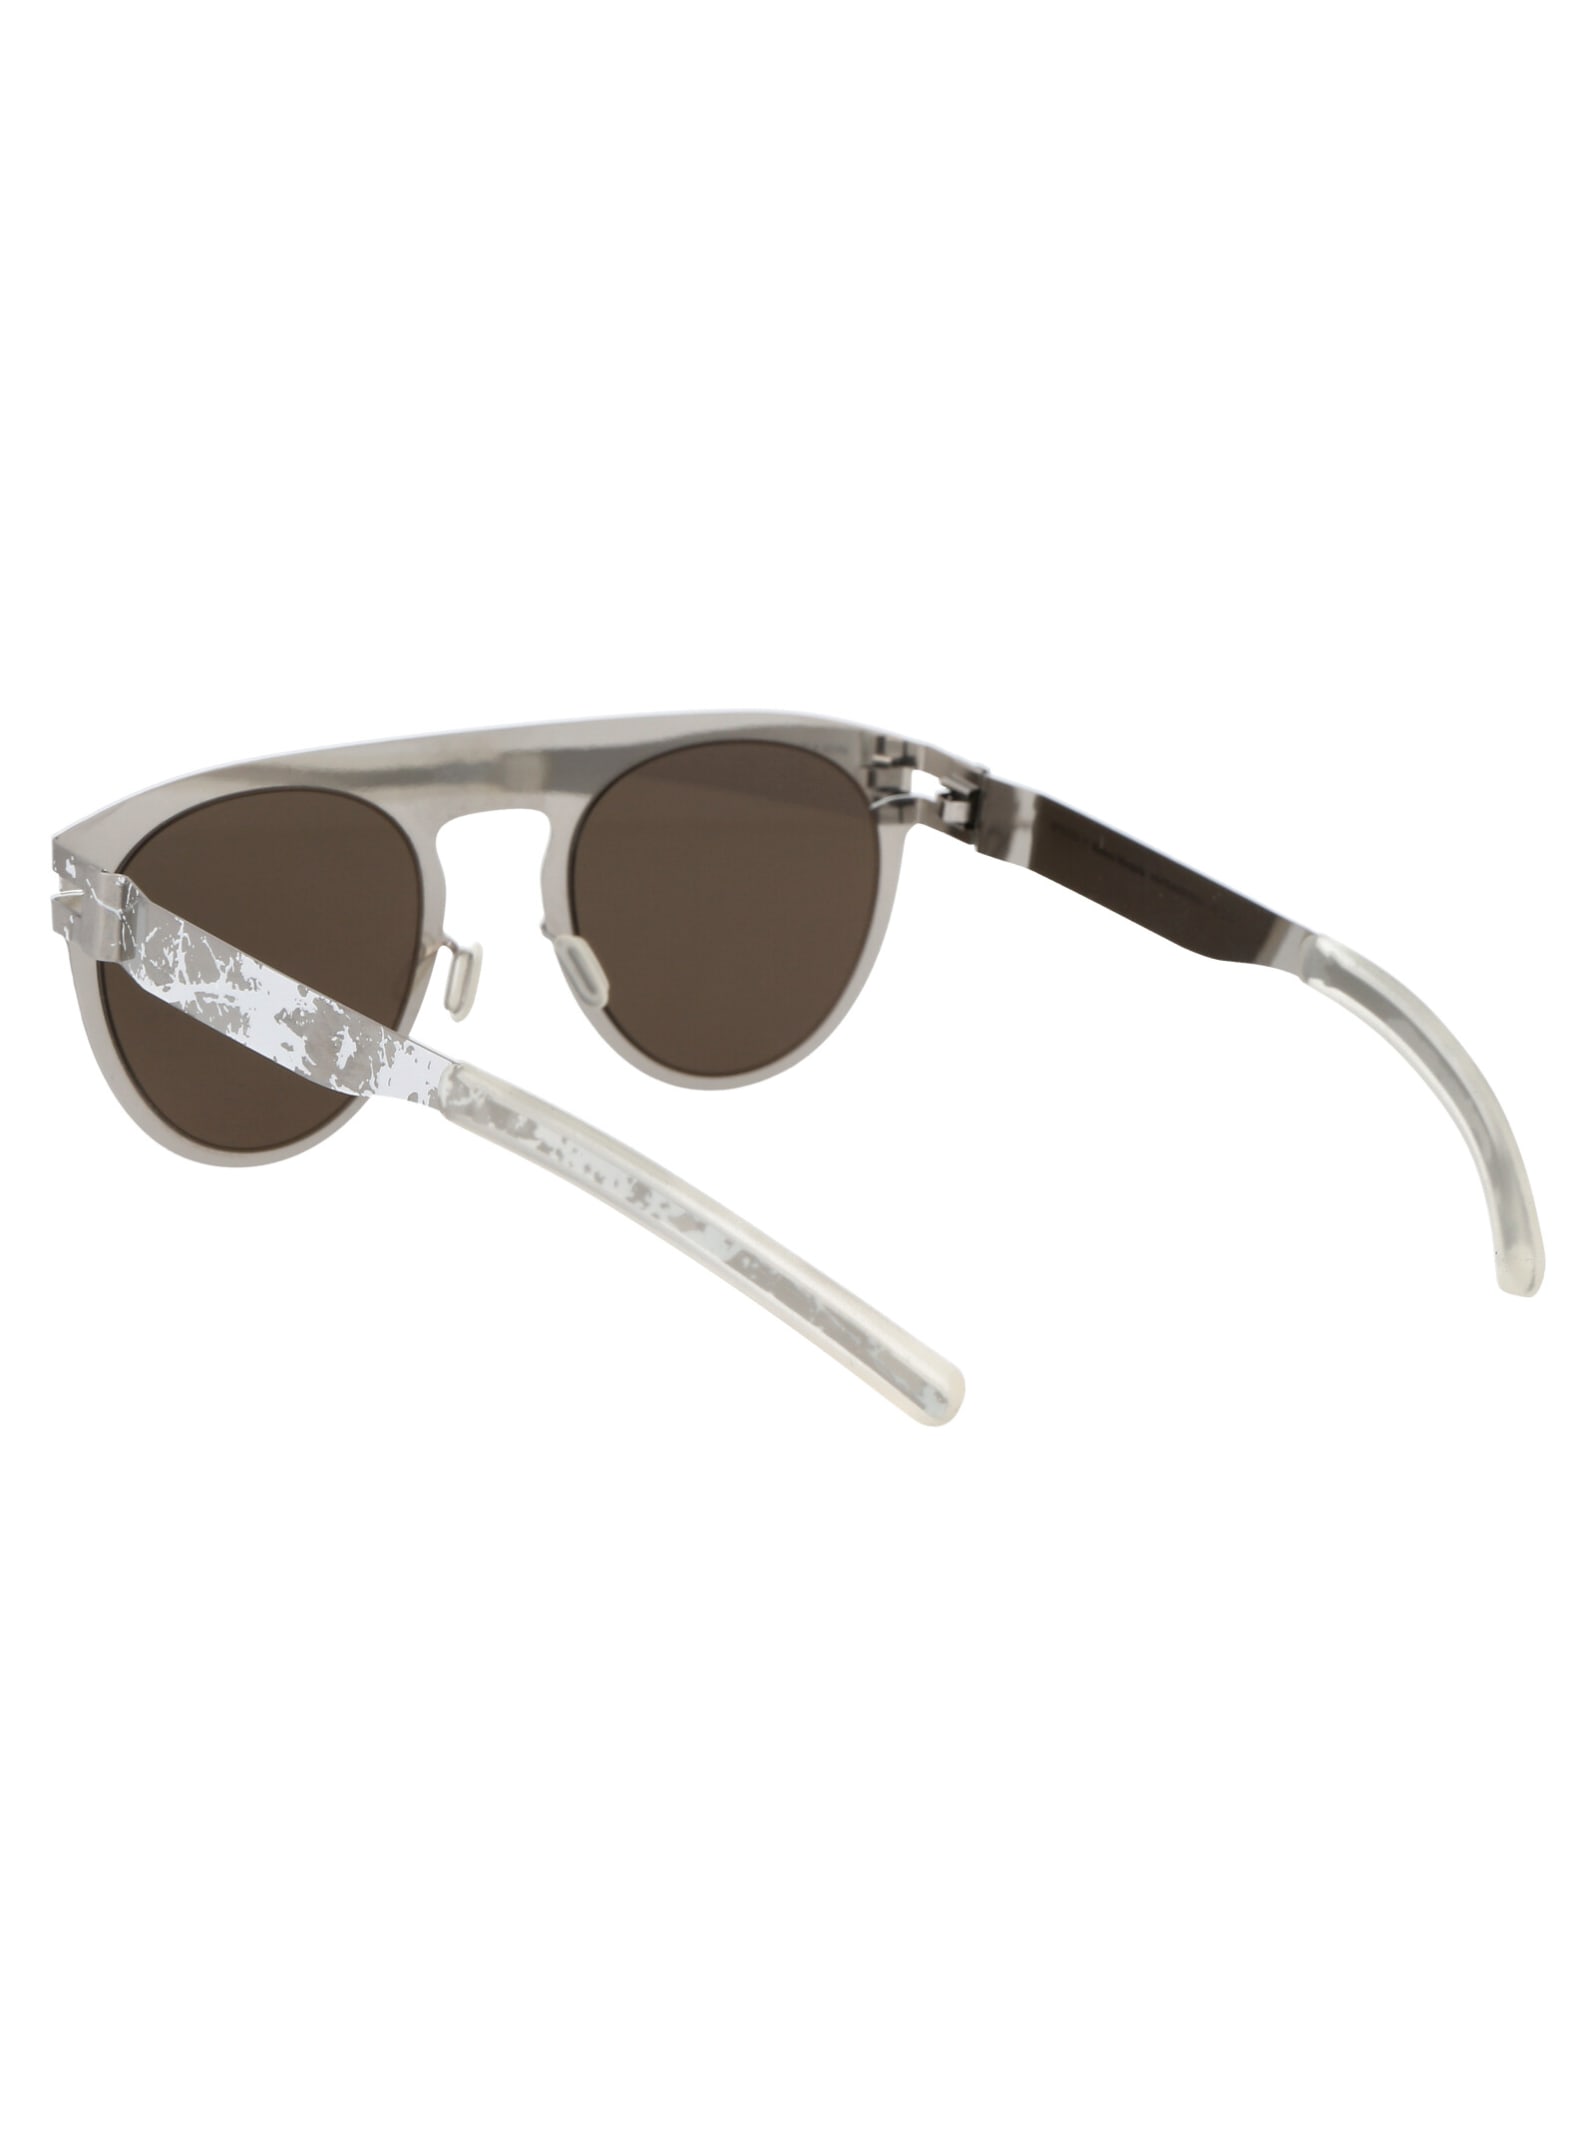 Shop Mykita Mmtransfer004 Sunglasses In 265 Silver White Stone Brown Flash